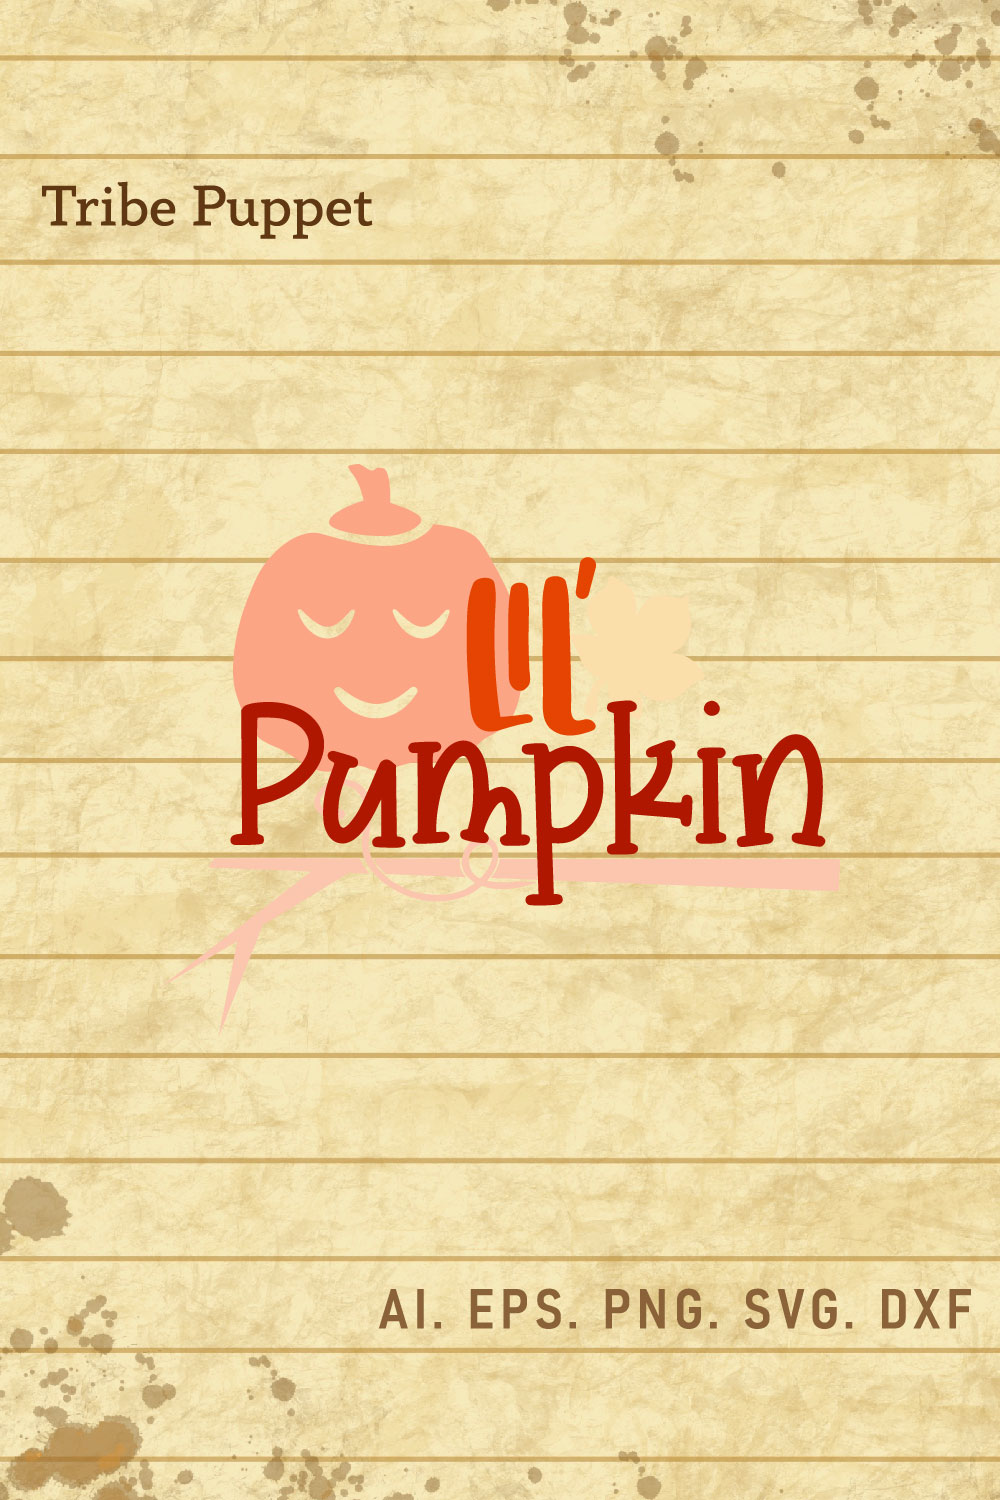 Pumpkin Quotes pinterest preview image.